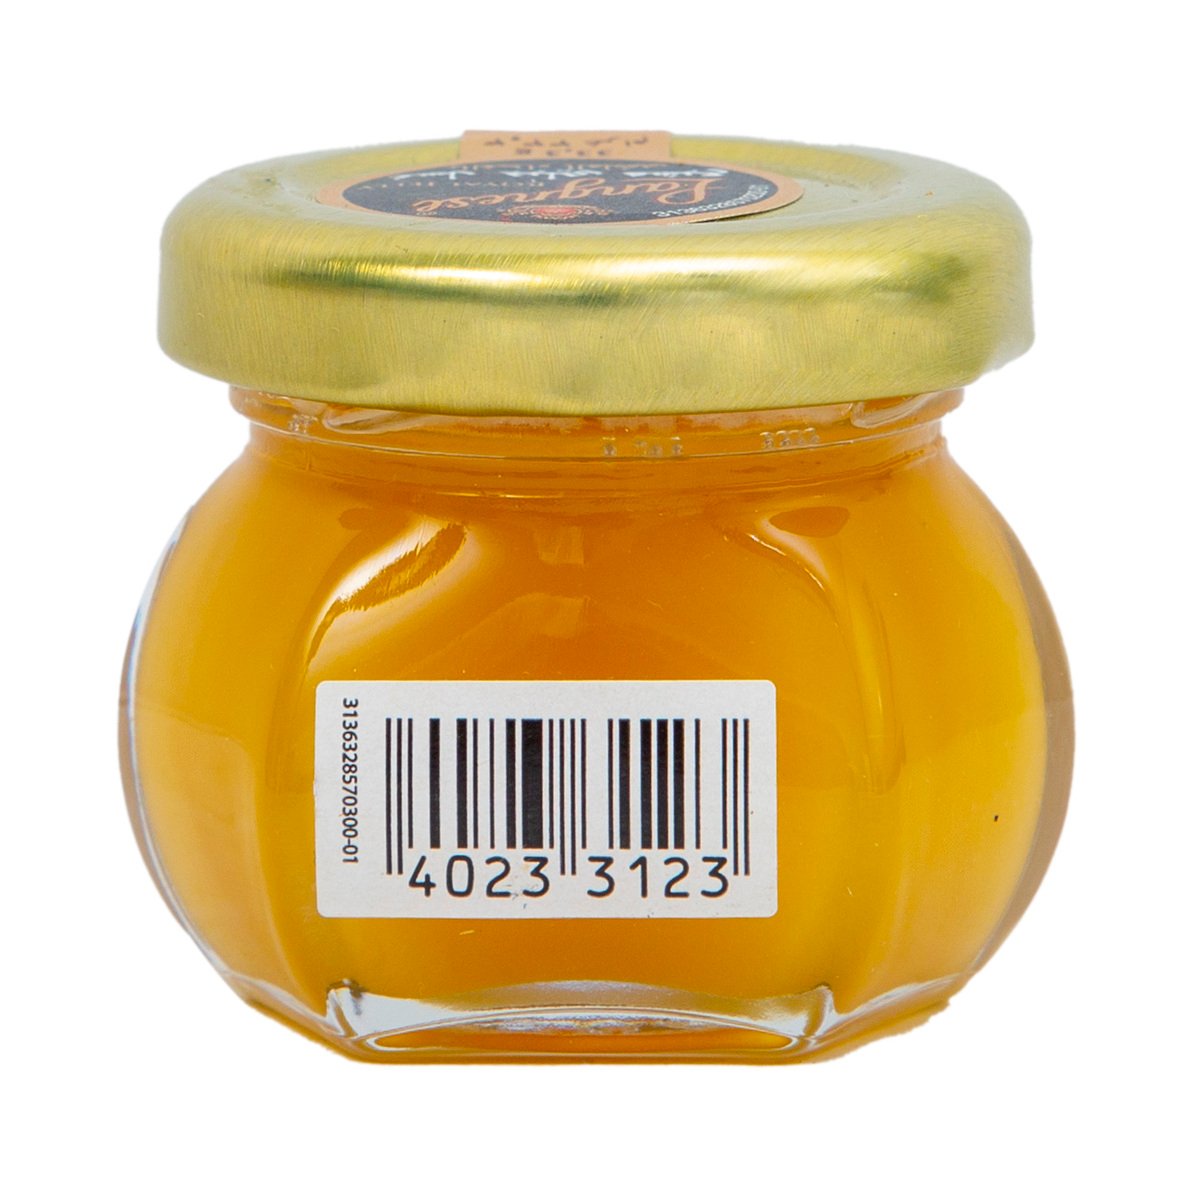 Langnese Royal Jelly Honey 33.3 g